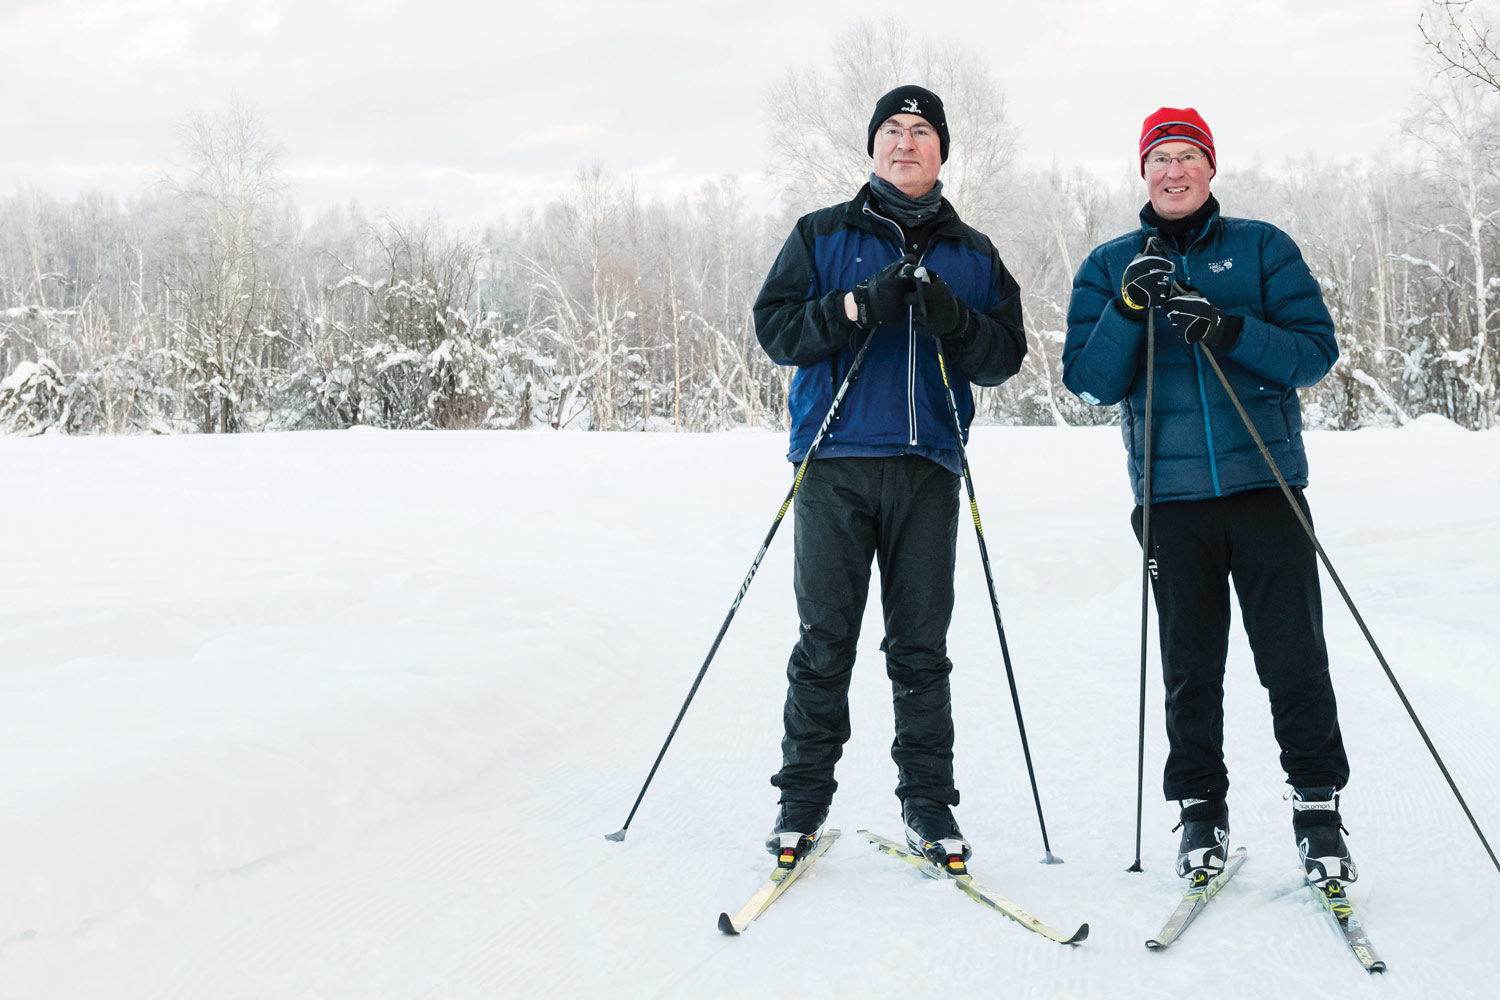 David & Jon Underwood posing together on skis